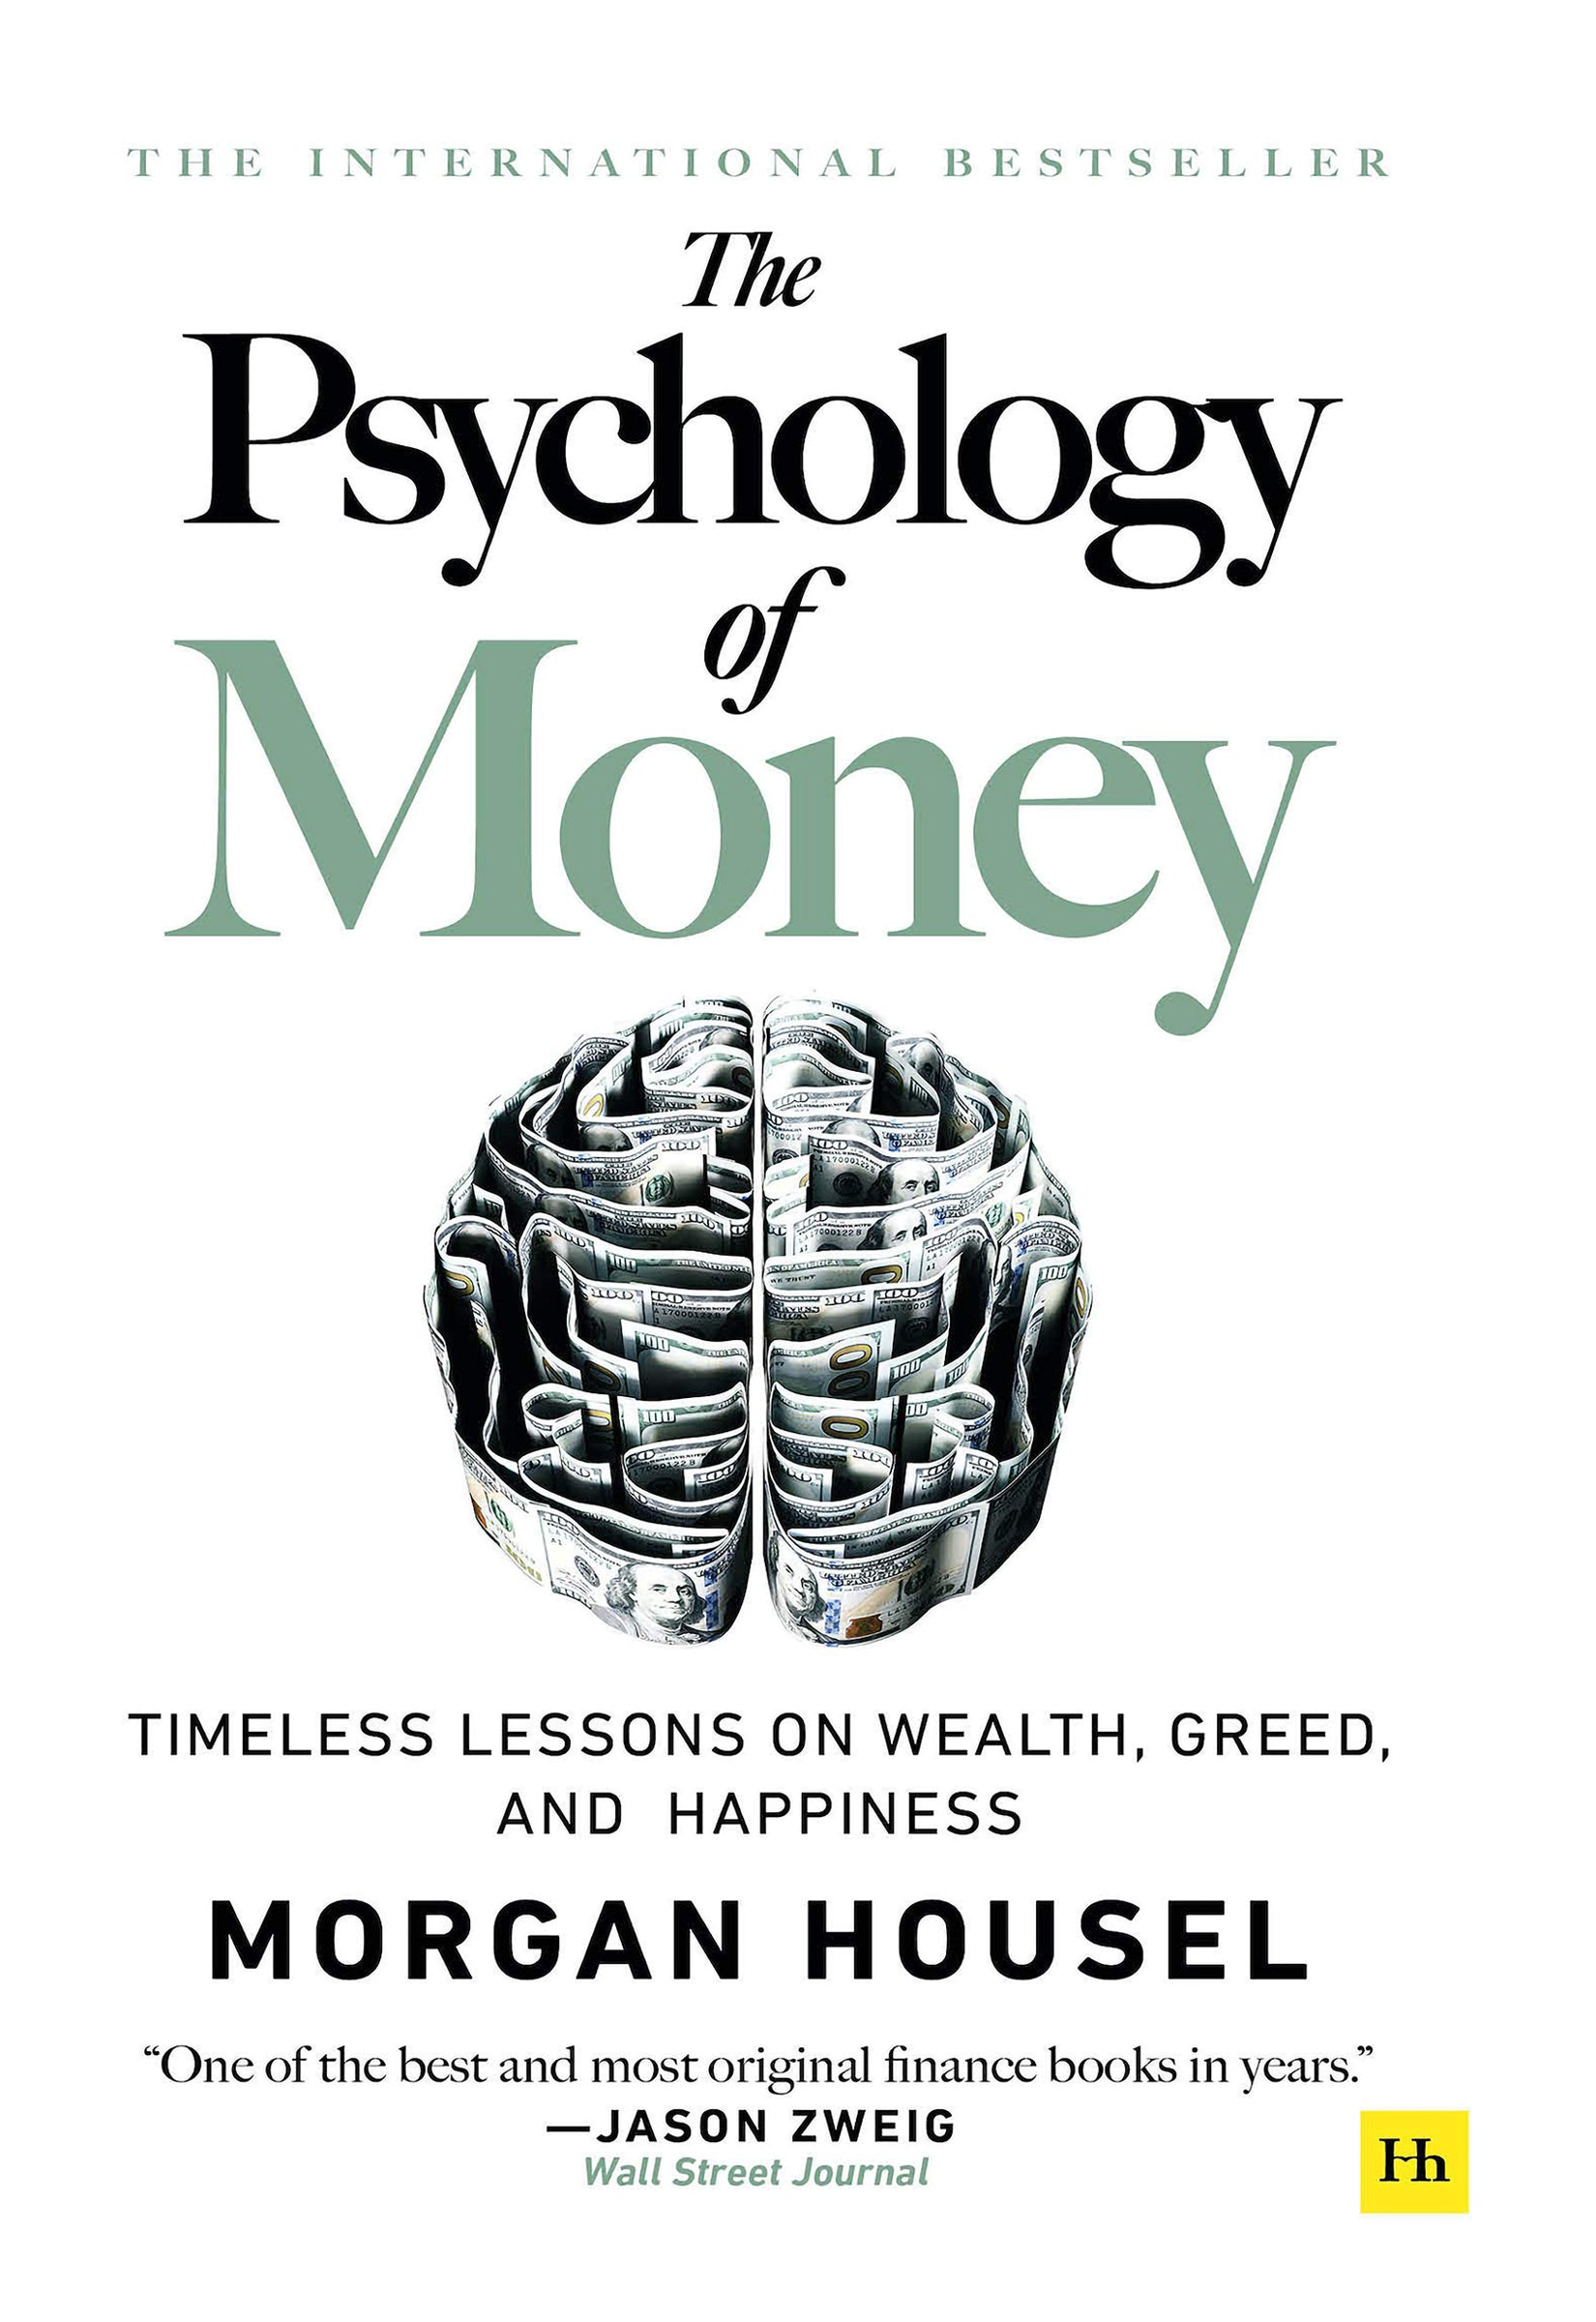 The Psychology of Money by Morgan Housel - Bookshelf.pk Pakistan